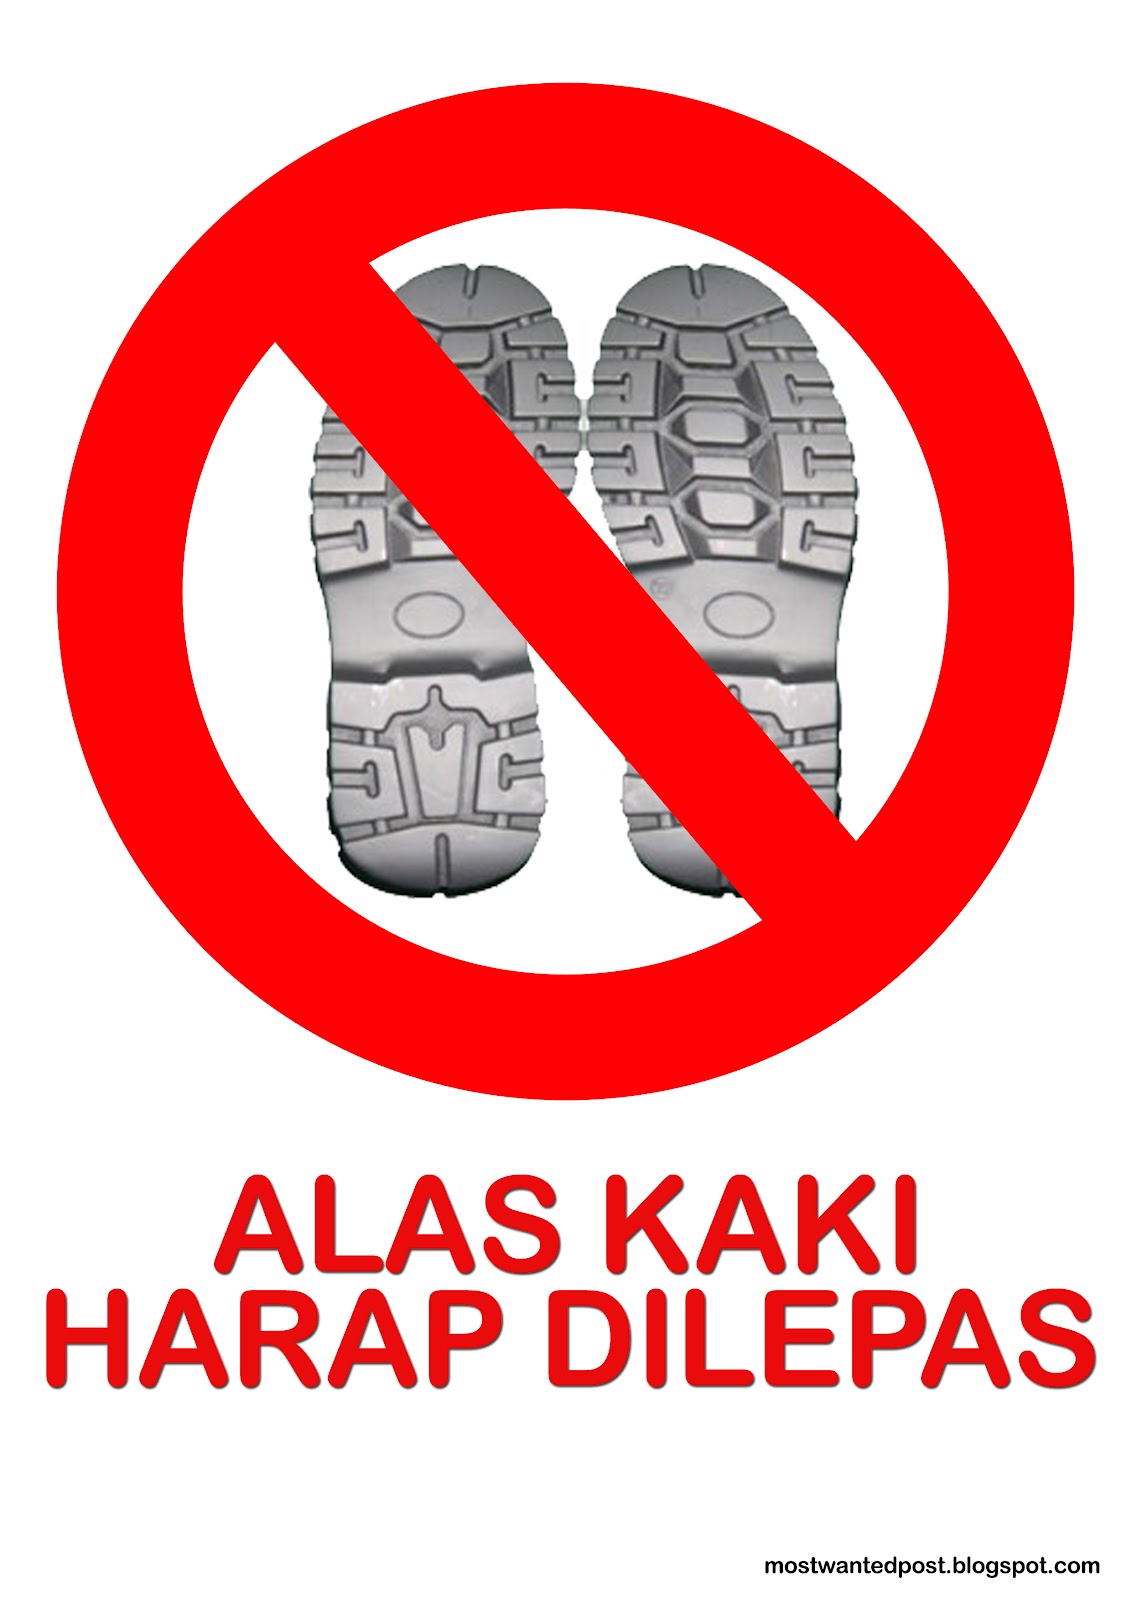 Most Wanted Post: Alas Kaki Harap Dilepas [Share Image]